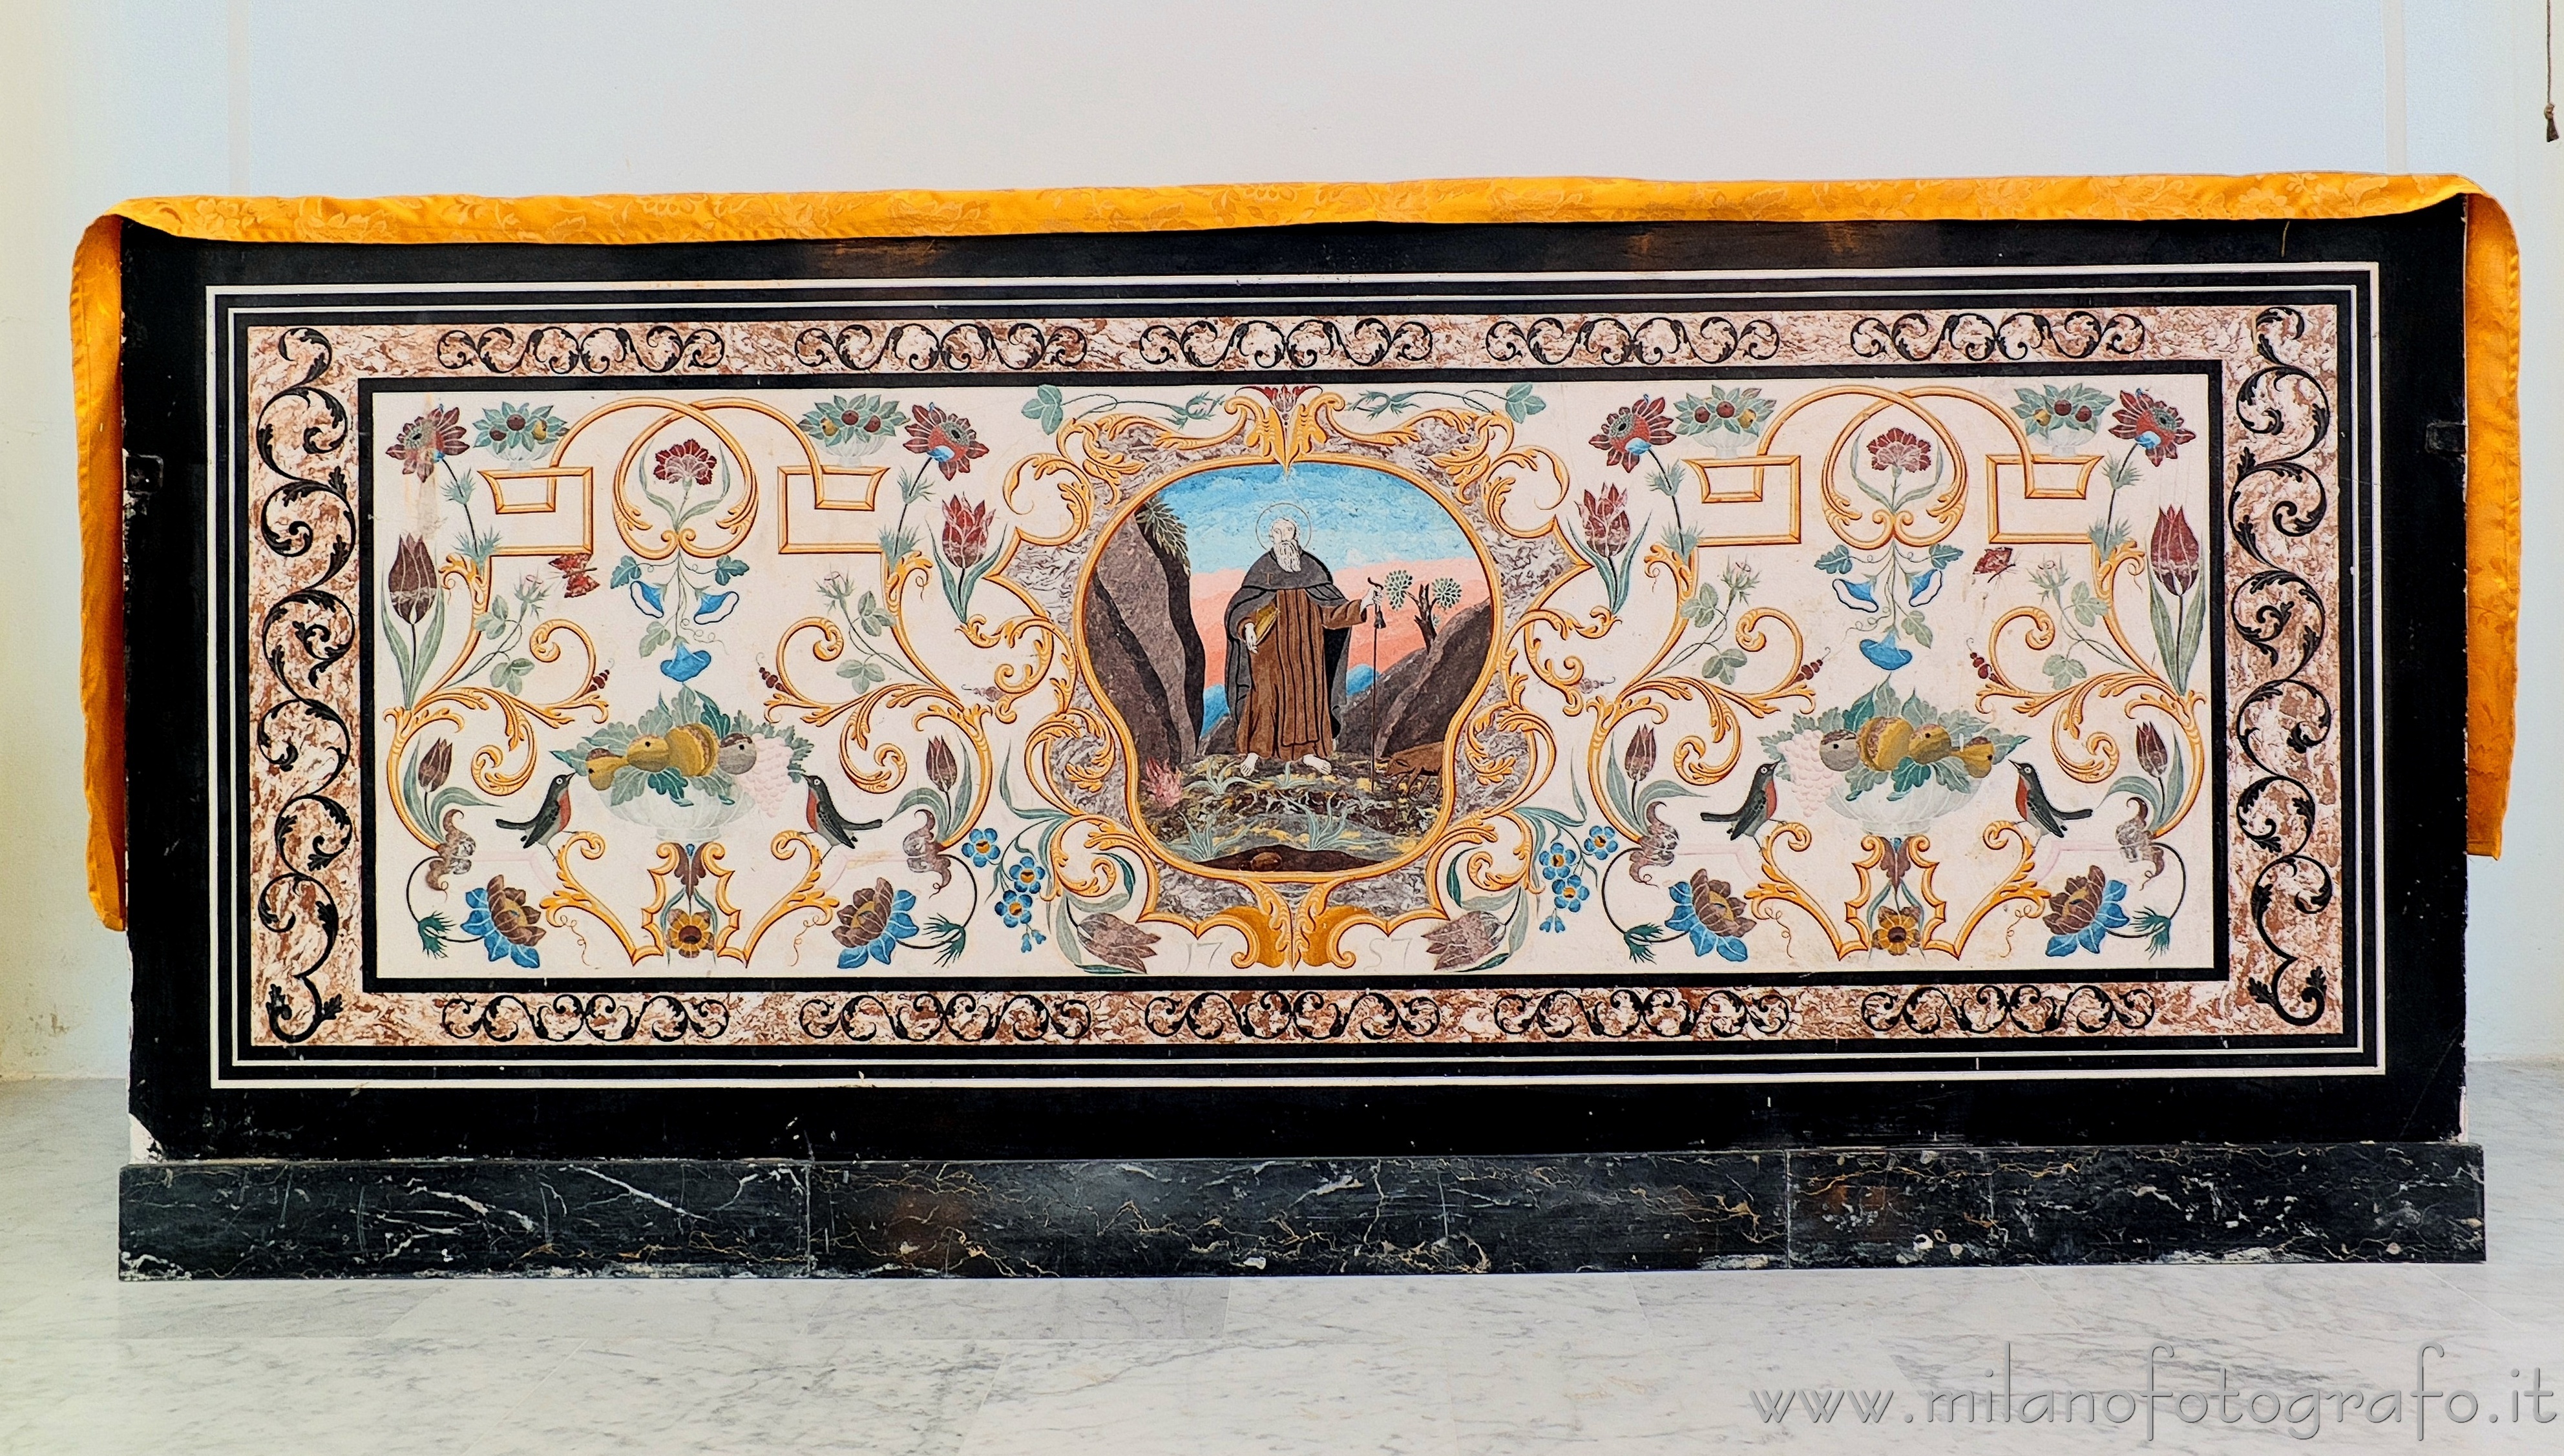 Mondaino (Rimini, Italy): Antependium frontal in the Church of Archangel Michael - Mondaino (Rimini, Italy)